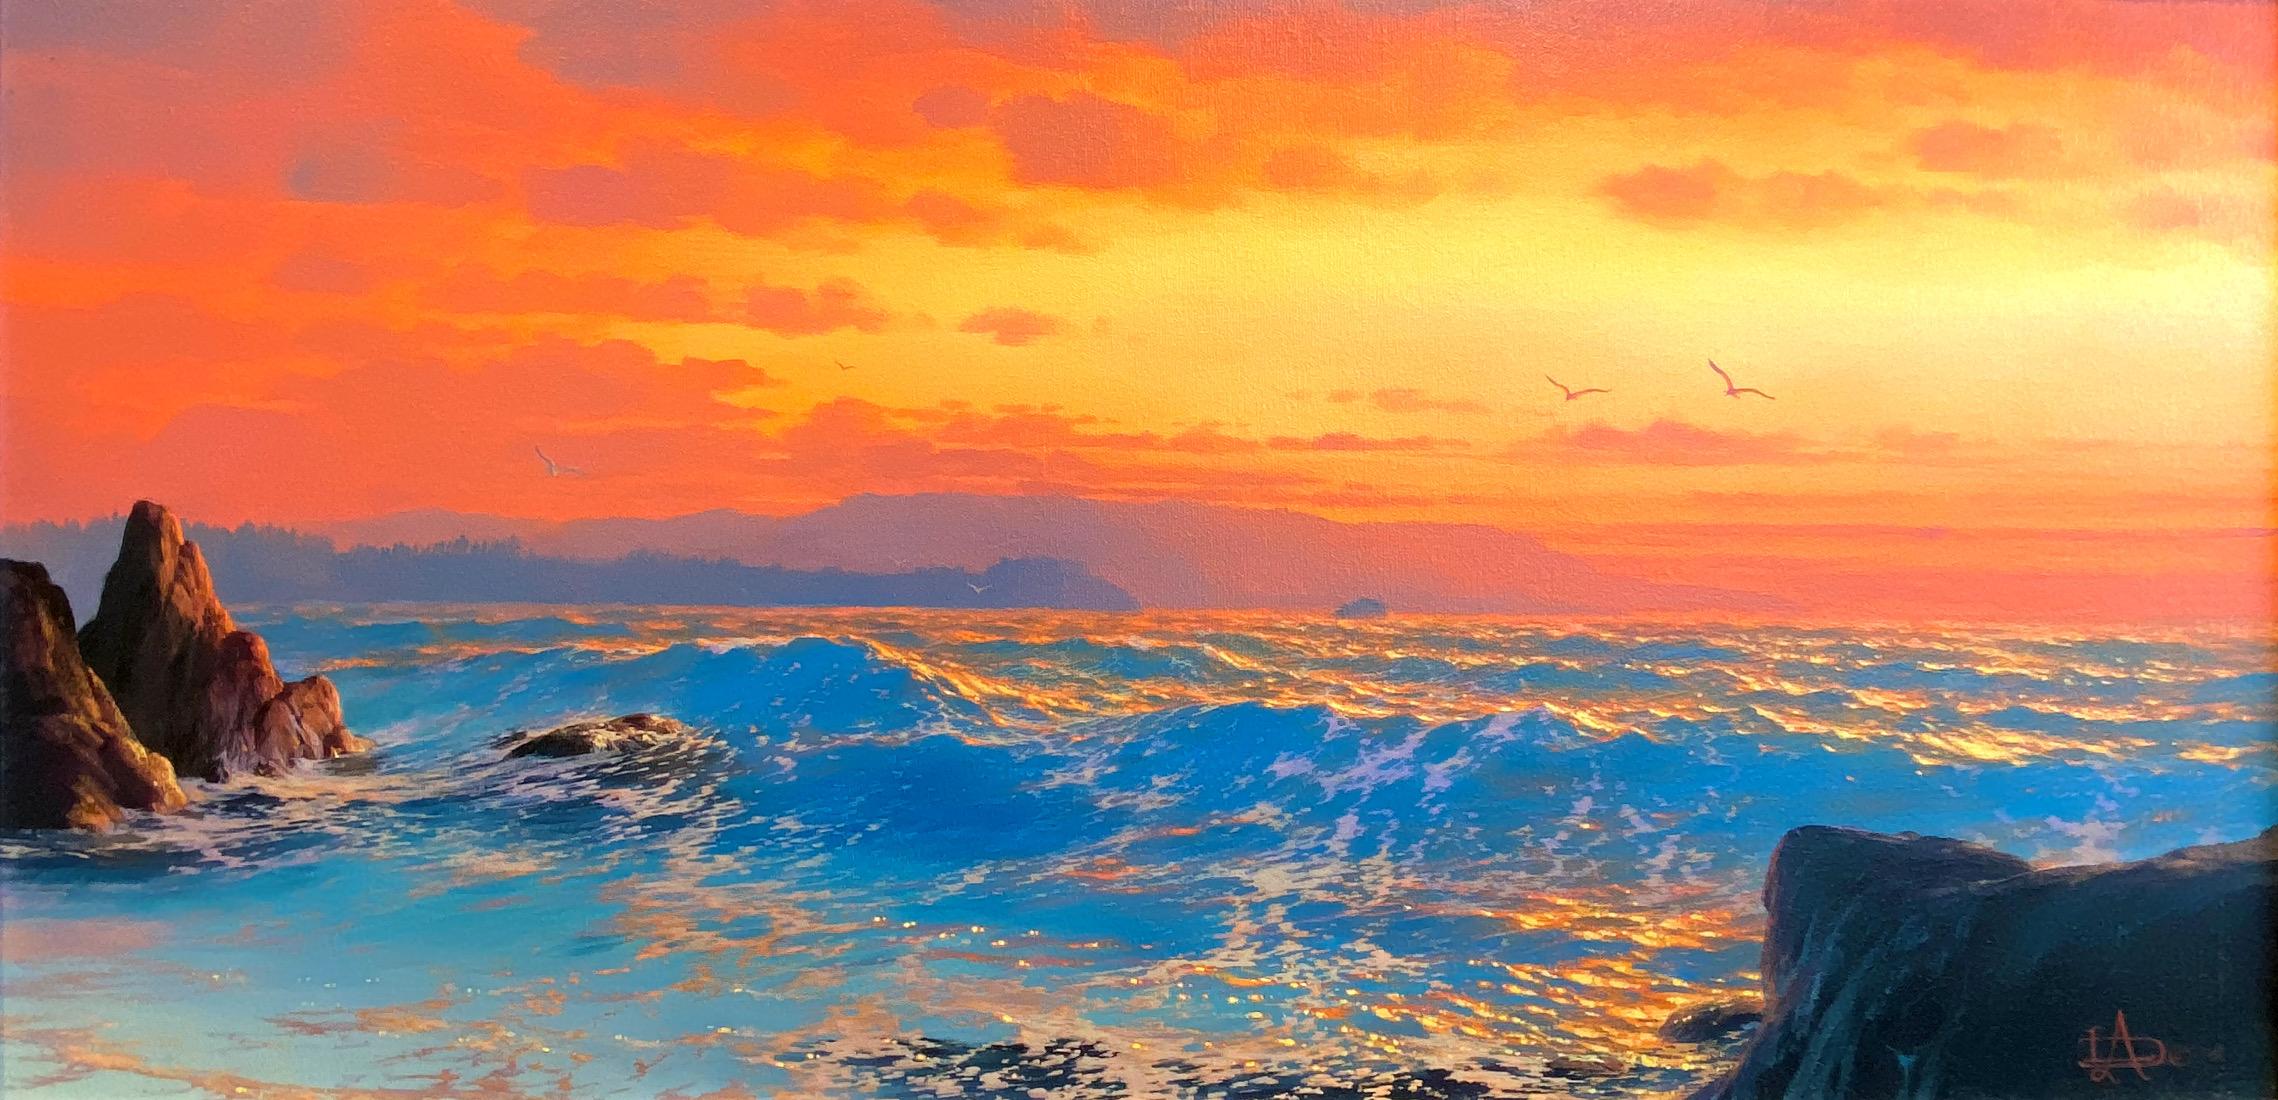 Loren Adams Landscape Painting - "The Opalesence" Seascape Ocean AMAZINGLY BEAUTIFUL Image 12 x 24